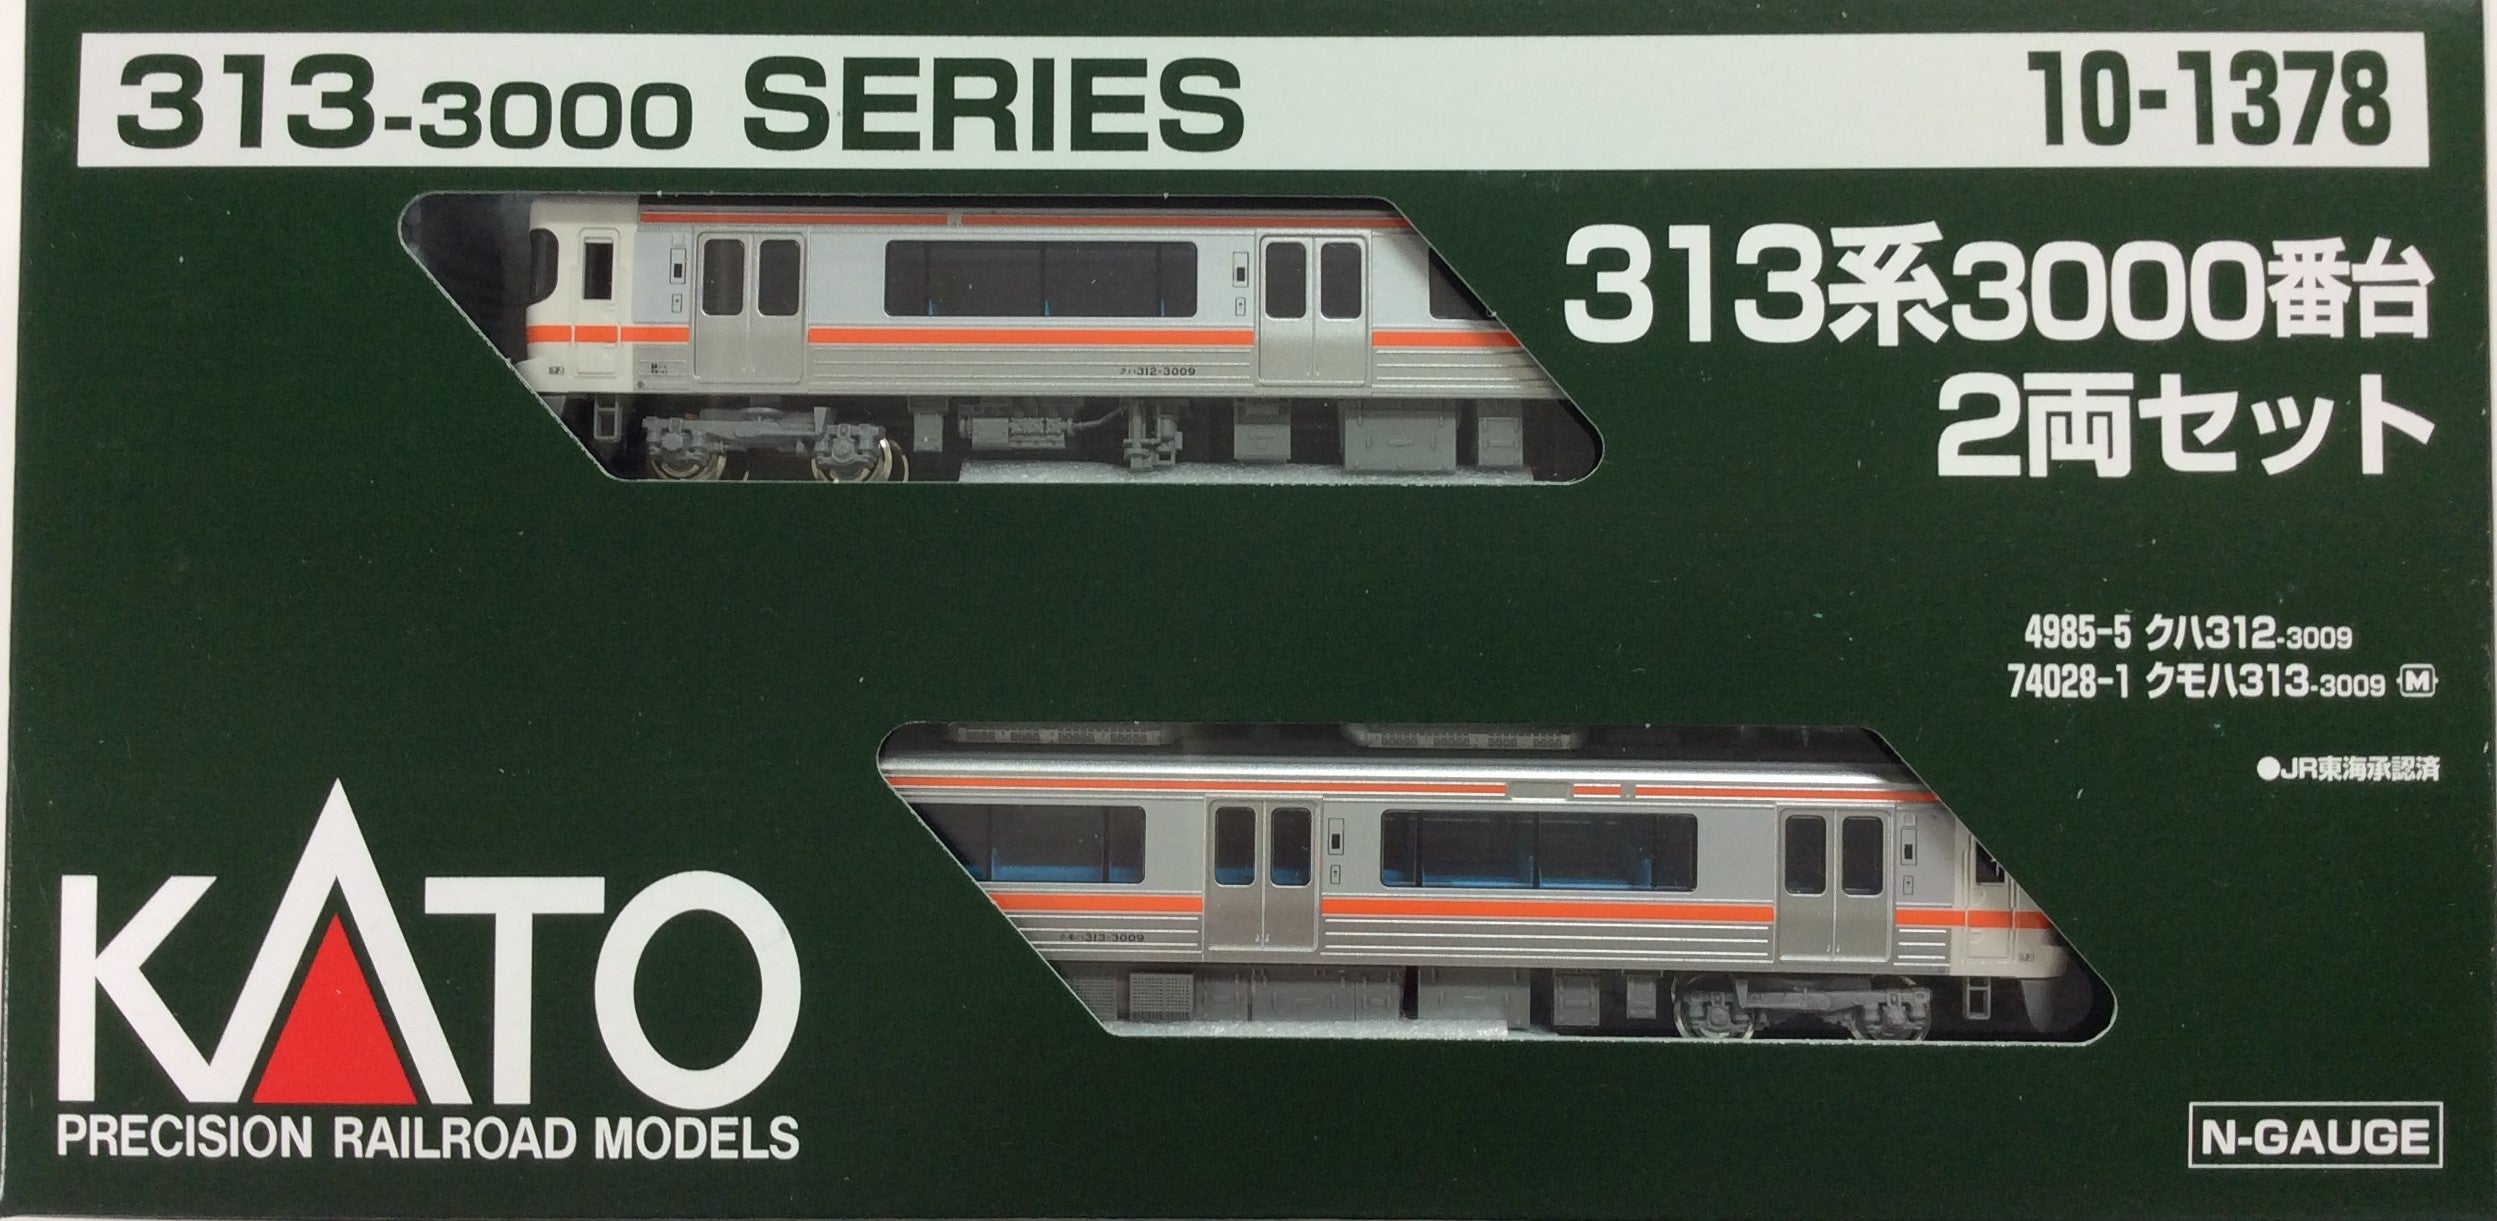 10-1378 Series 313-3000 (2-Car Set)